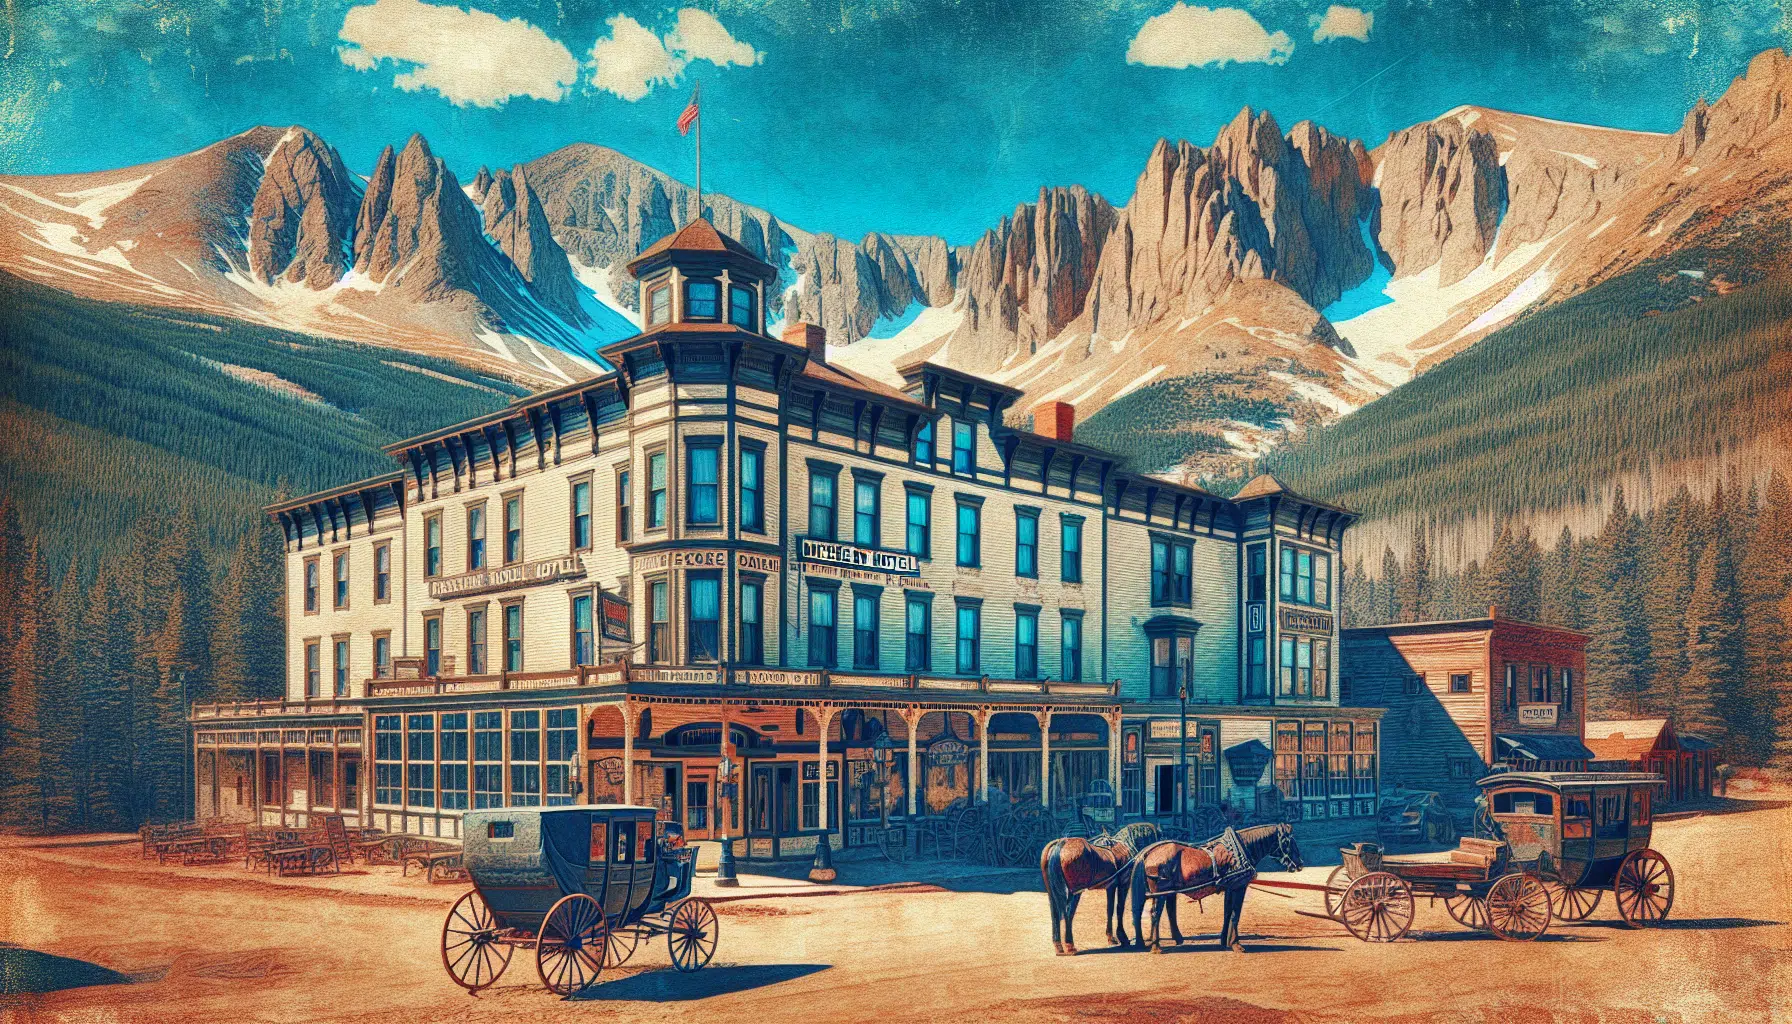 The Meeker Hotel: 1896 Historic Colorado Inn's Legacy